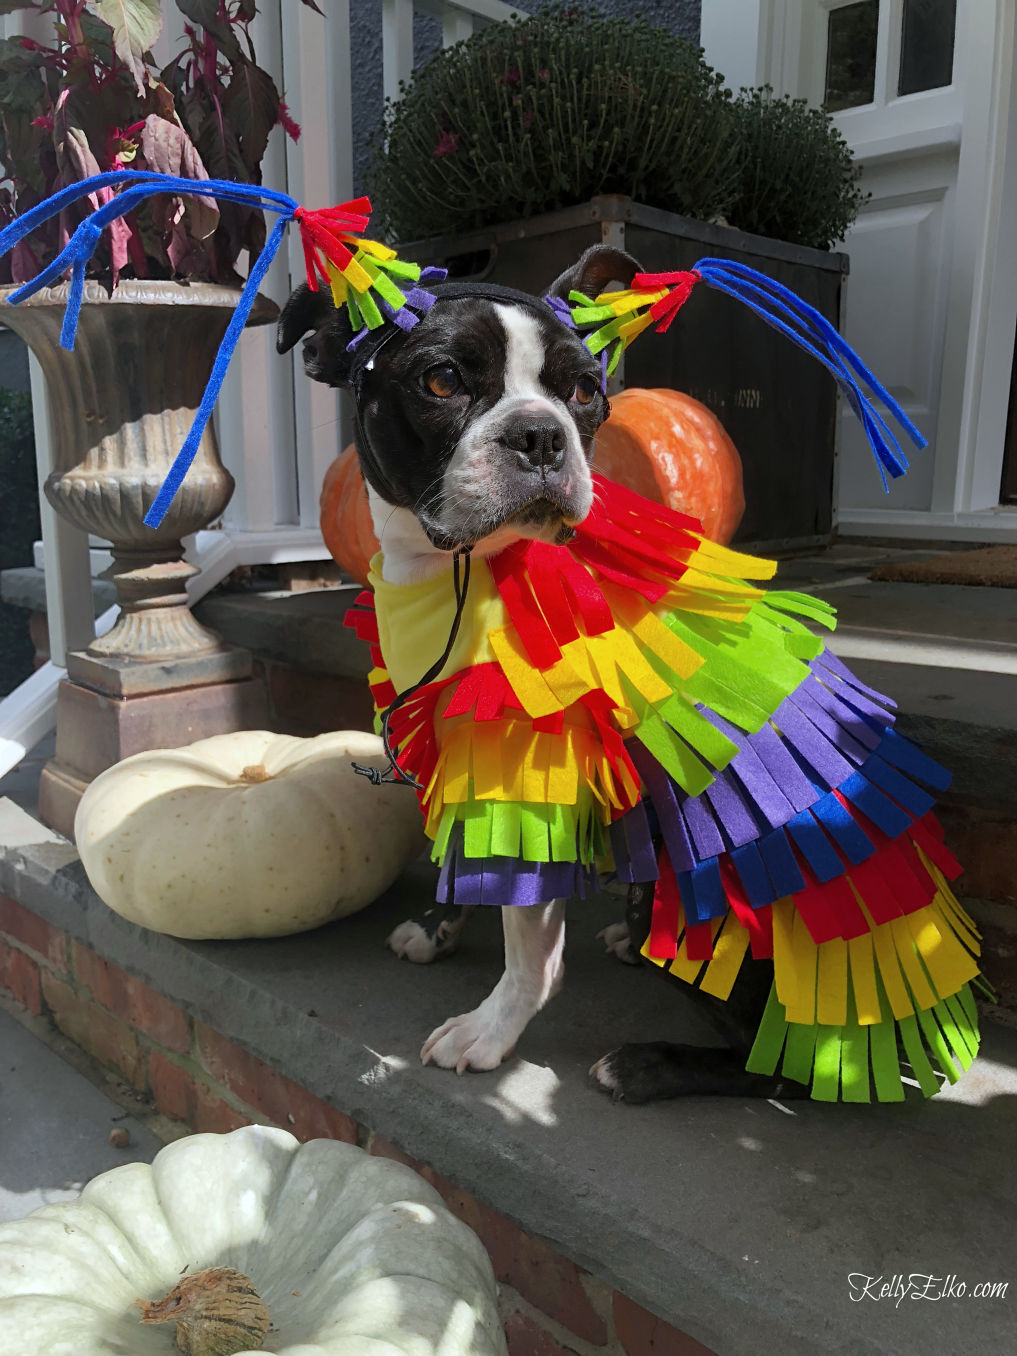 Dog Halloween costume - how cute is this Halloween pinata costume for your dog! kellyelko.com #dogs #petcostume #dogcostume #halloweencostumes #halloween #pinata